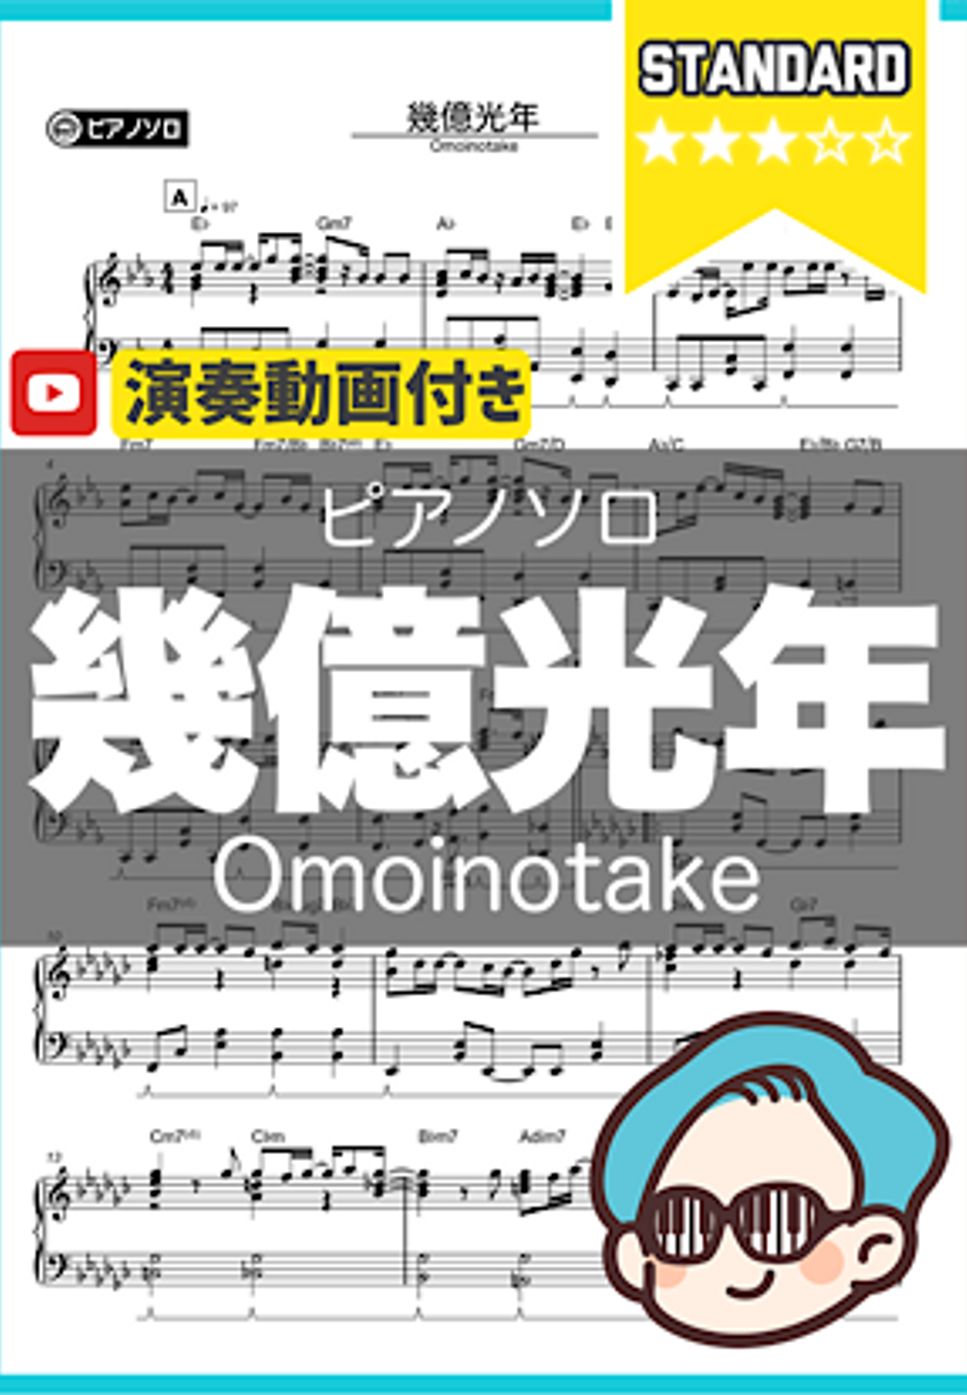 Omoinotake - 幾億光年 by シータピアノ